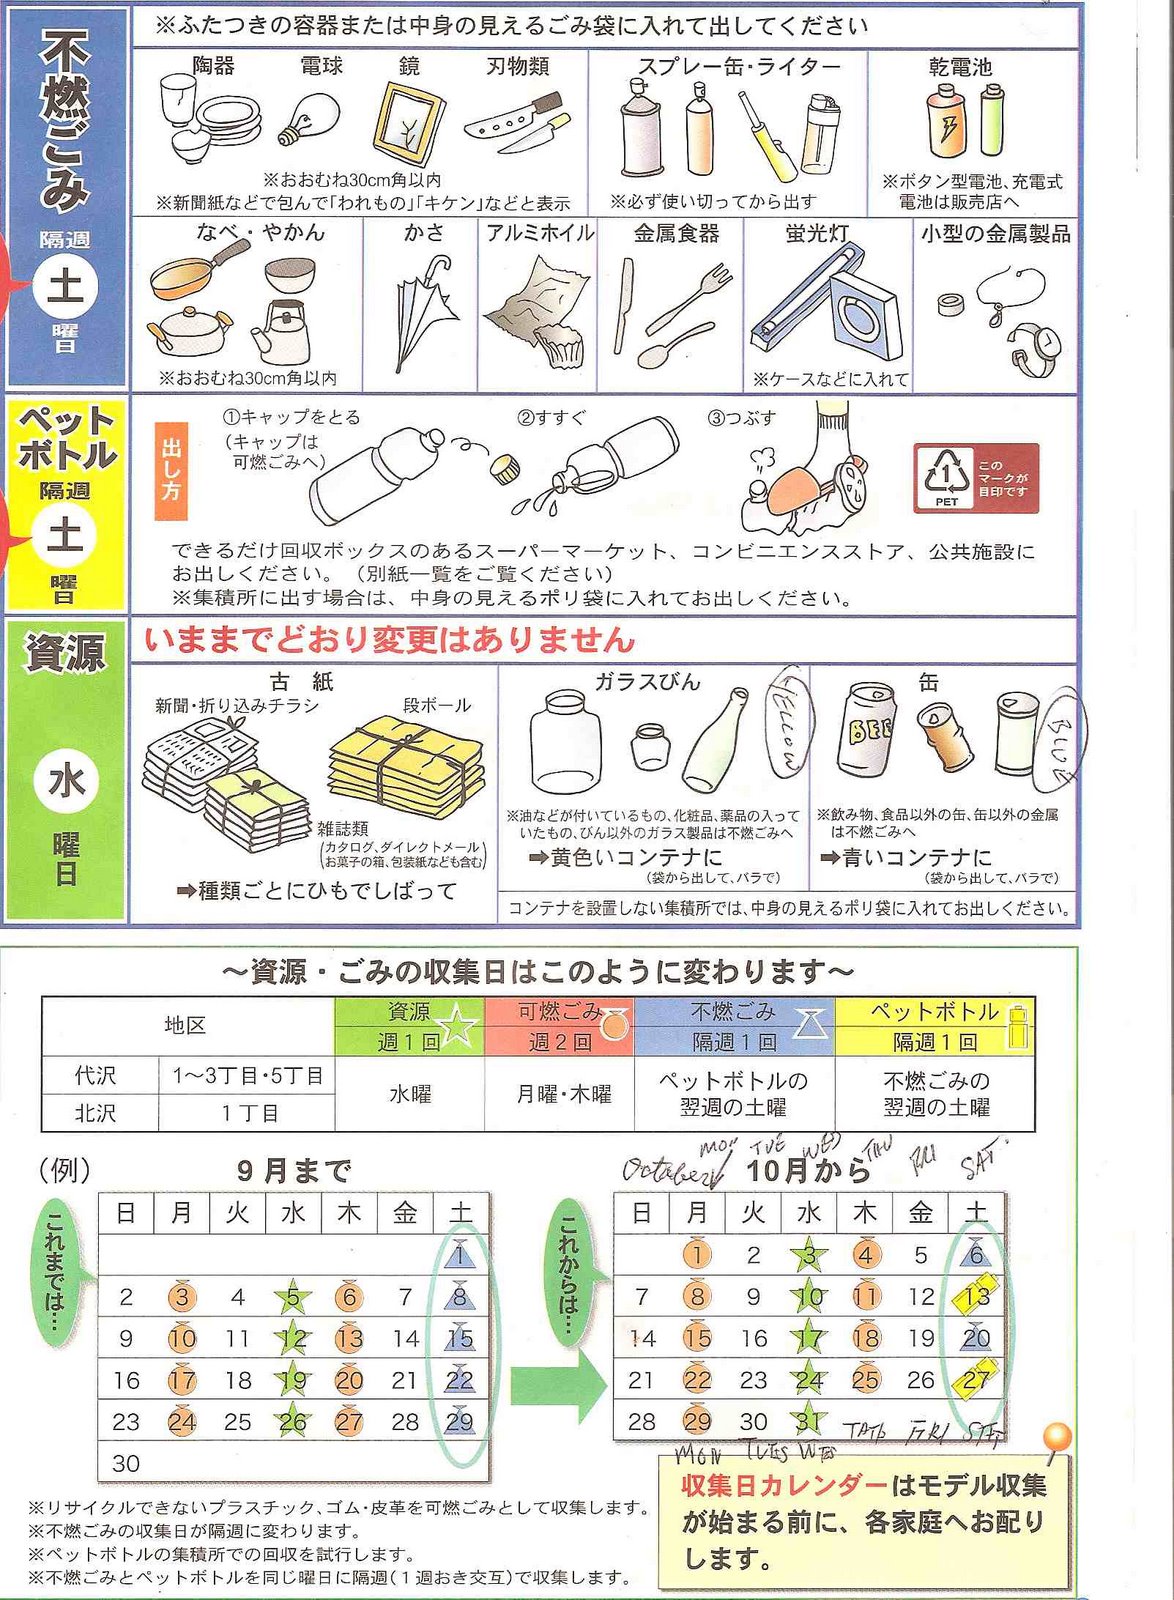 Setagaya ku recycling instructions in Japanese